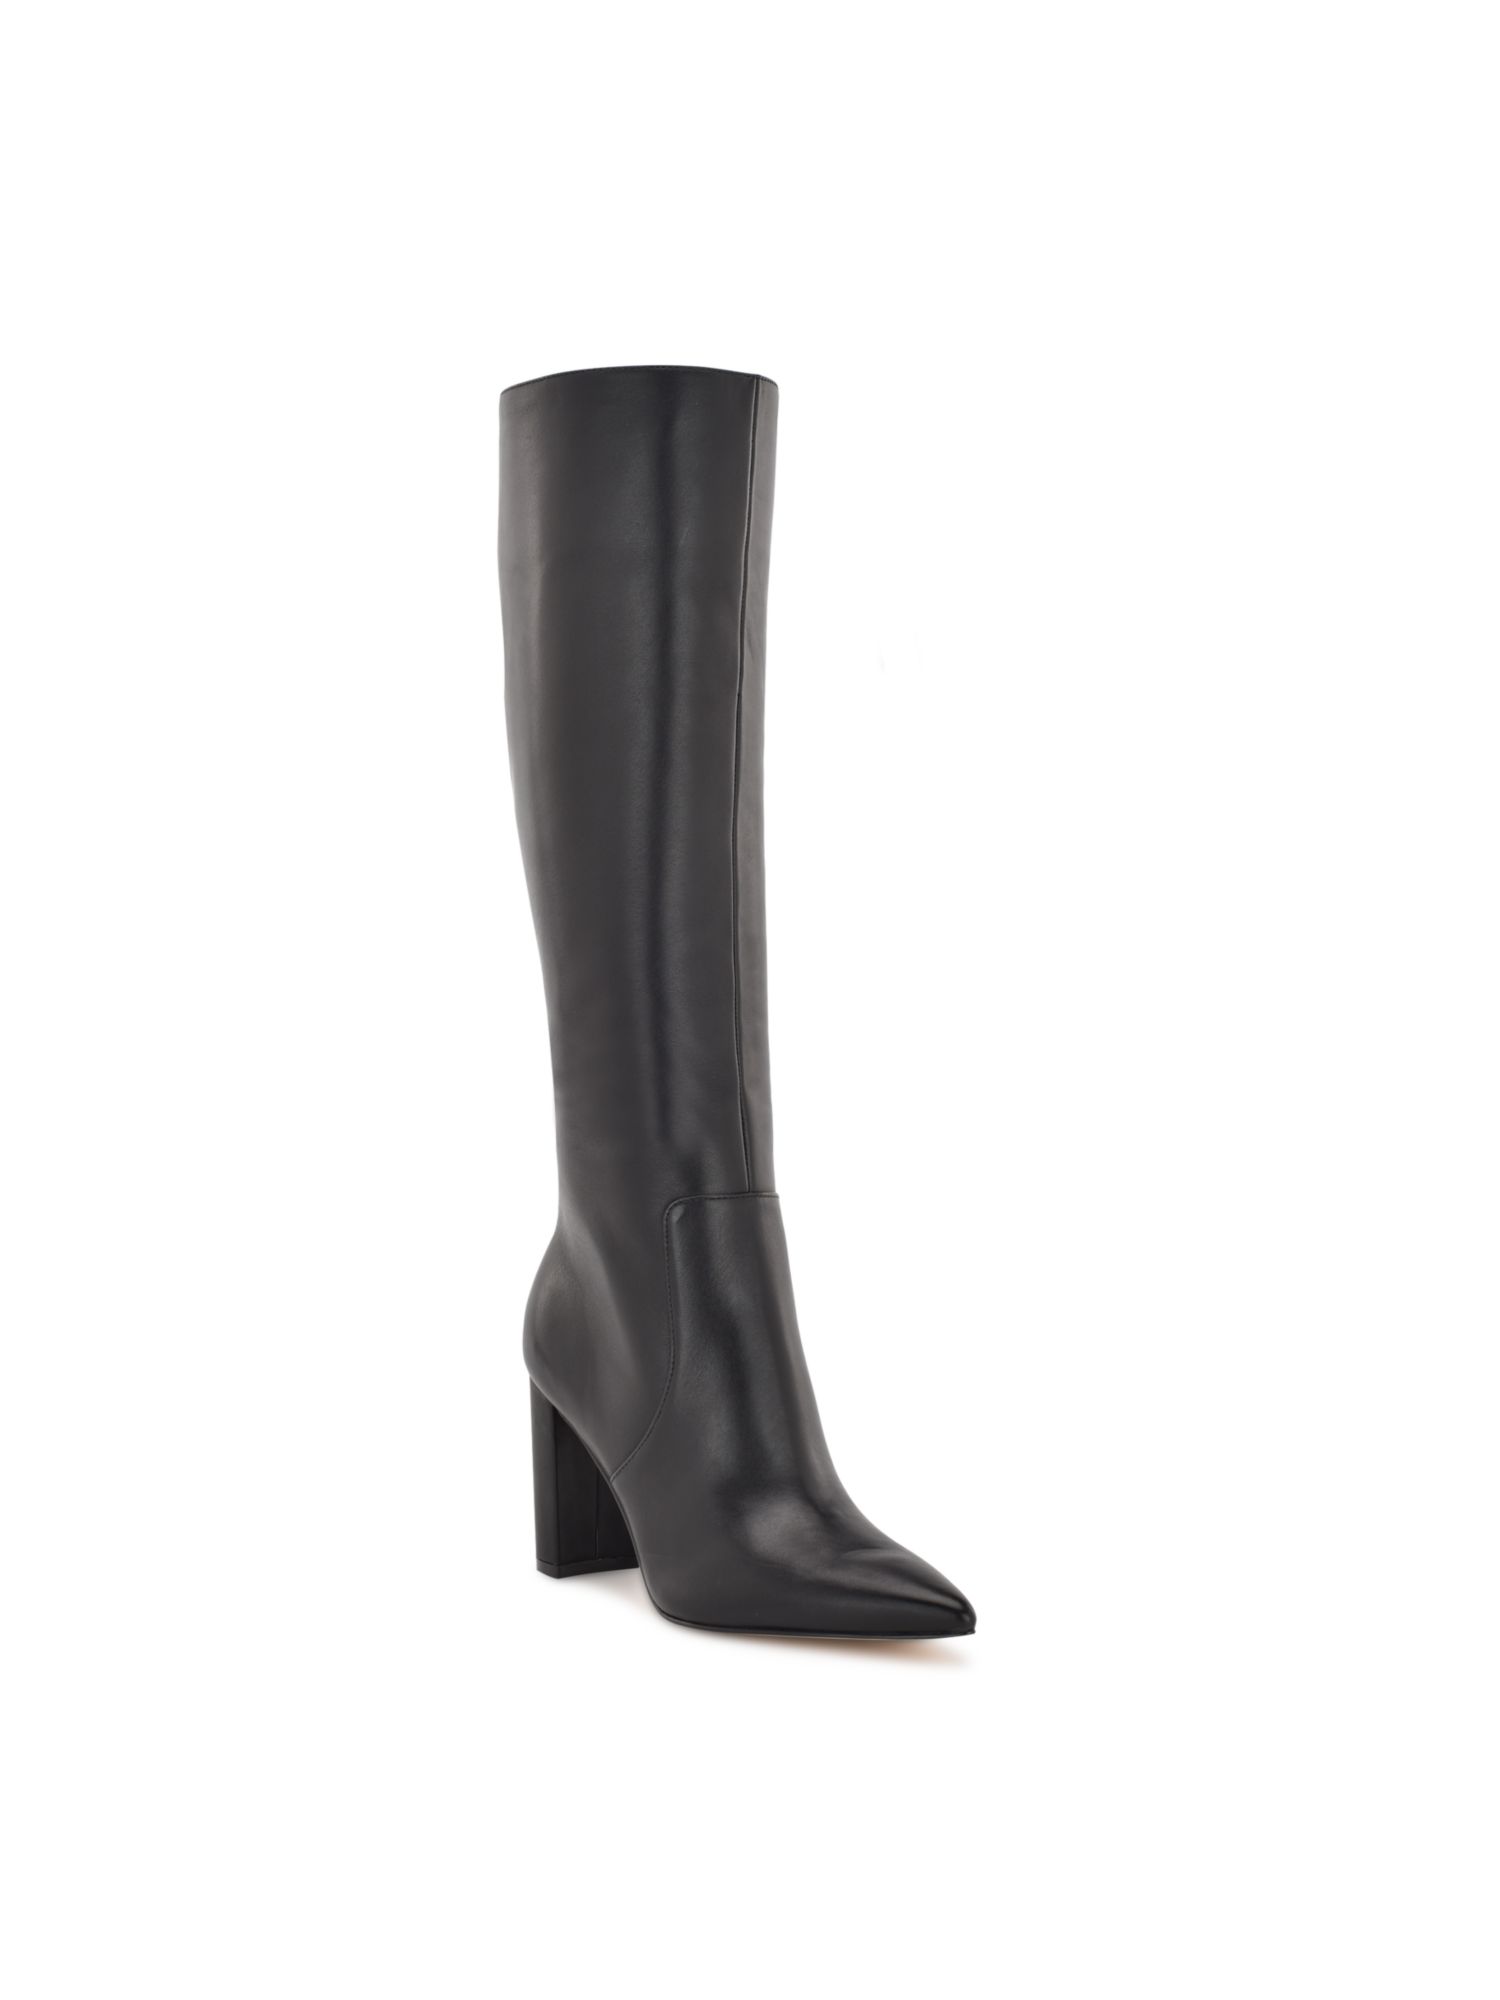 NINE WEST Womens Black Goring Padded Danee Pointed Toe Block Heel Zip-Up Leather Dress Boots 12 M